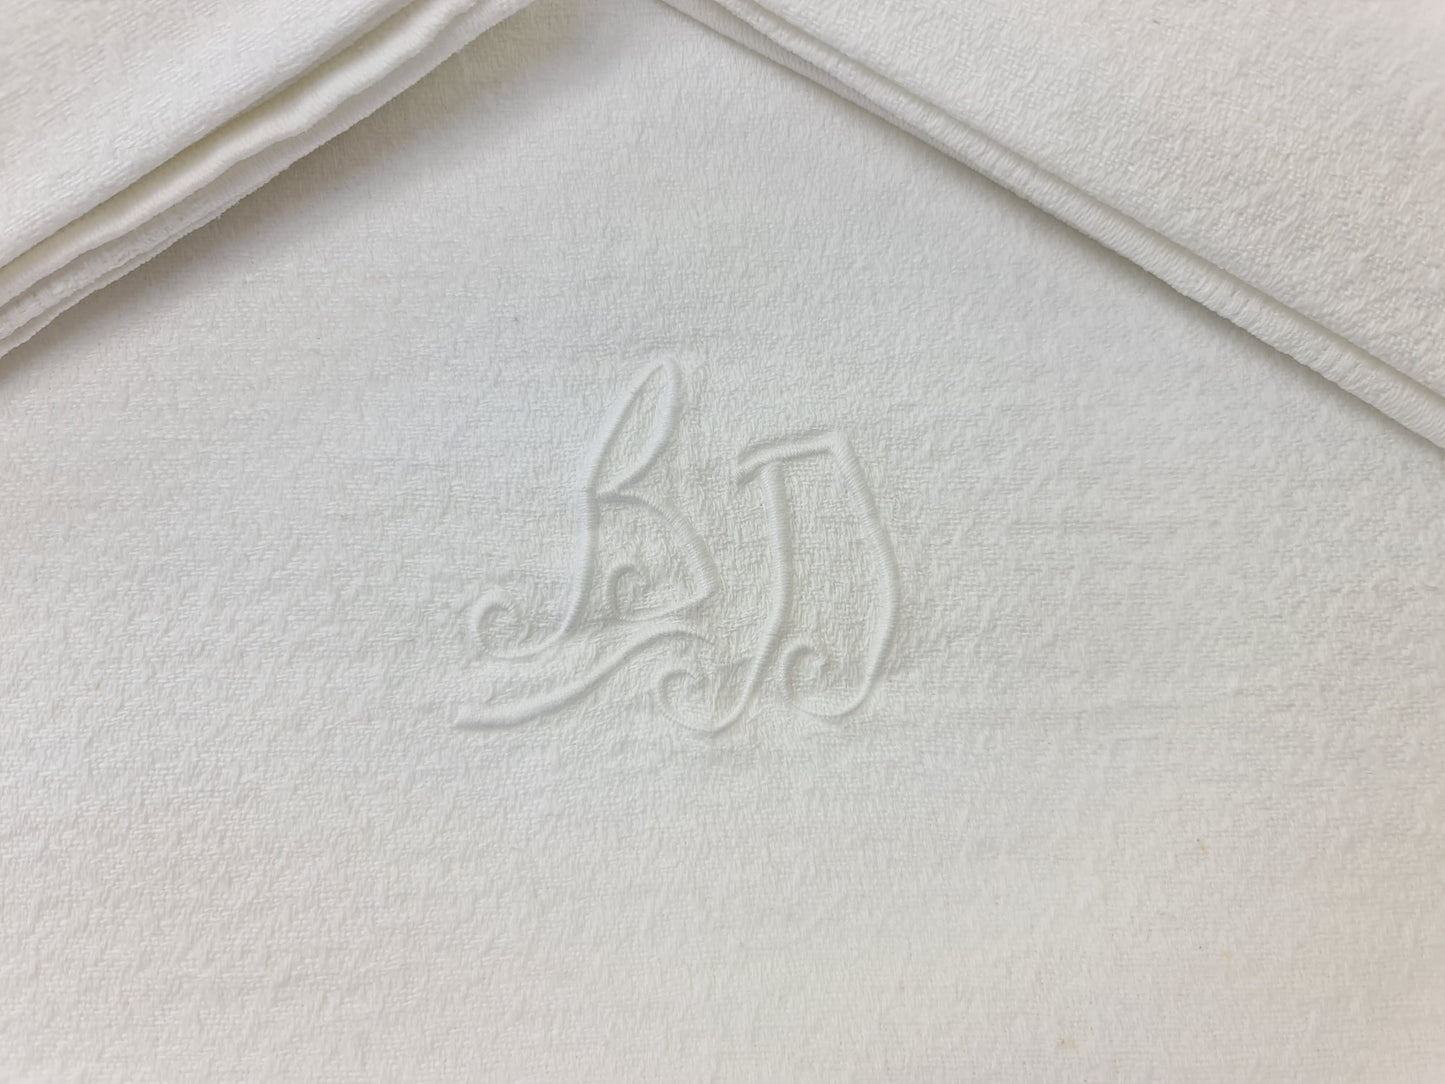 Set 12 BD BJJ French vintage monogram napkins & tablecloth Immaculate